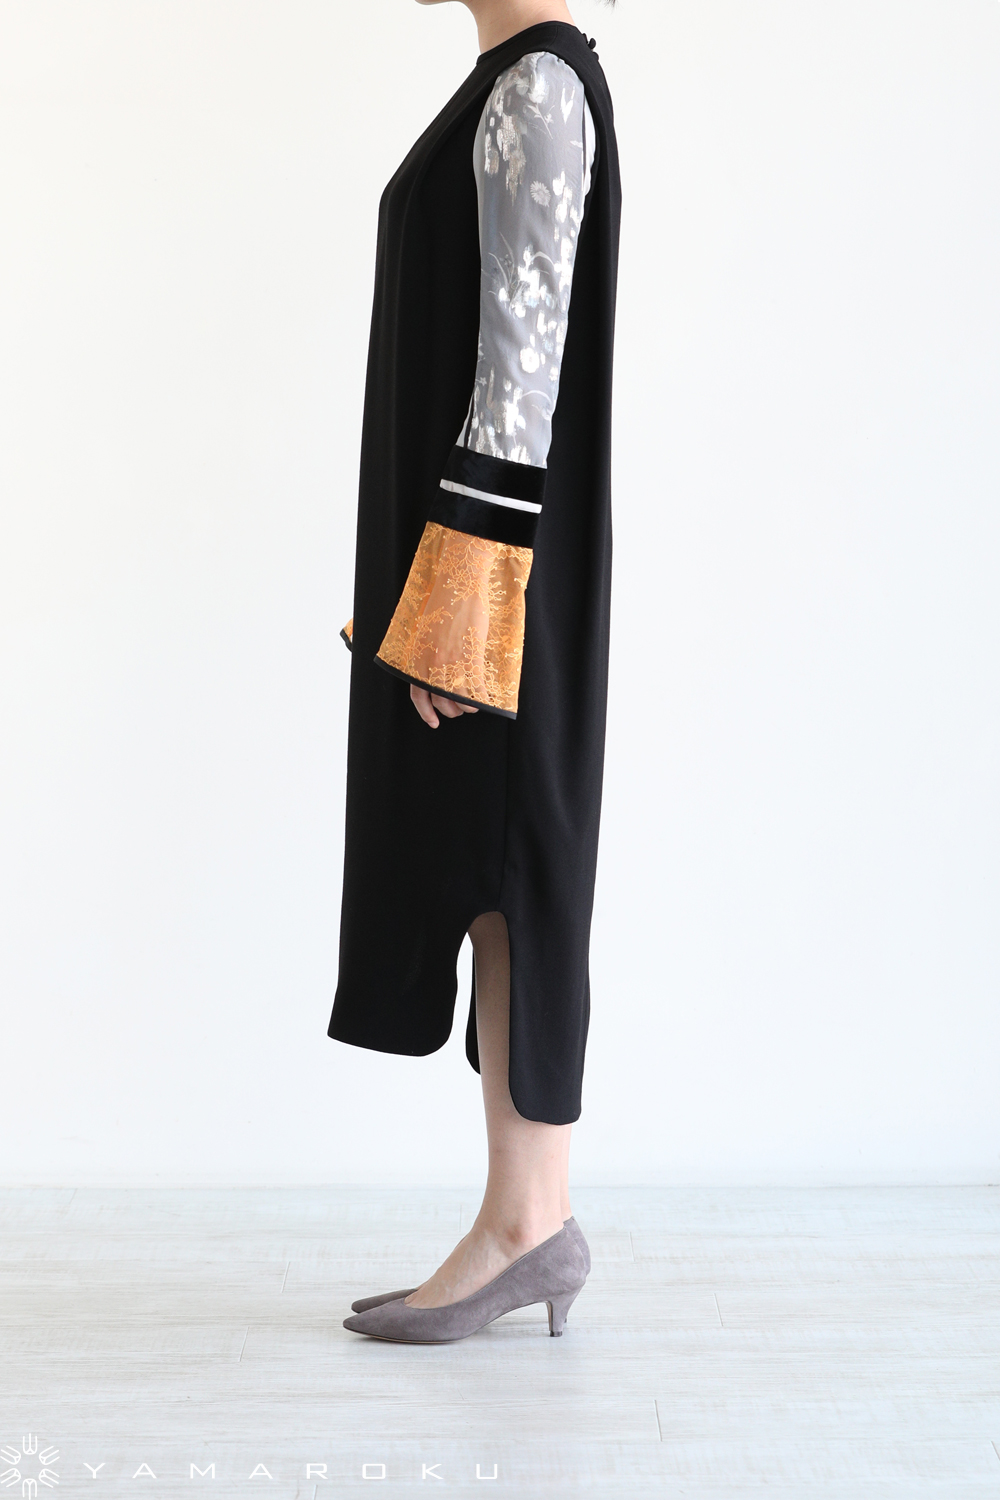 Mame Kurogouchi(マメ) Silk Lame Print Sleeves Dress！！ | YAMAROKU 